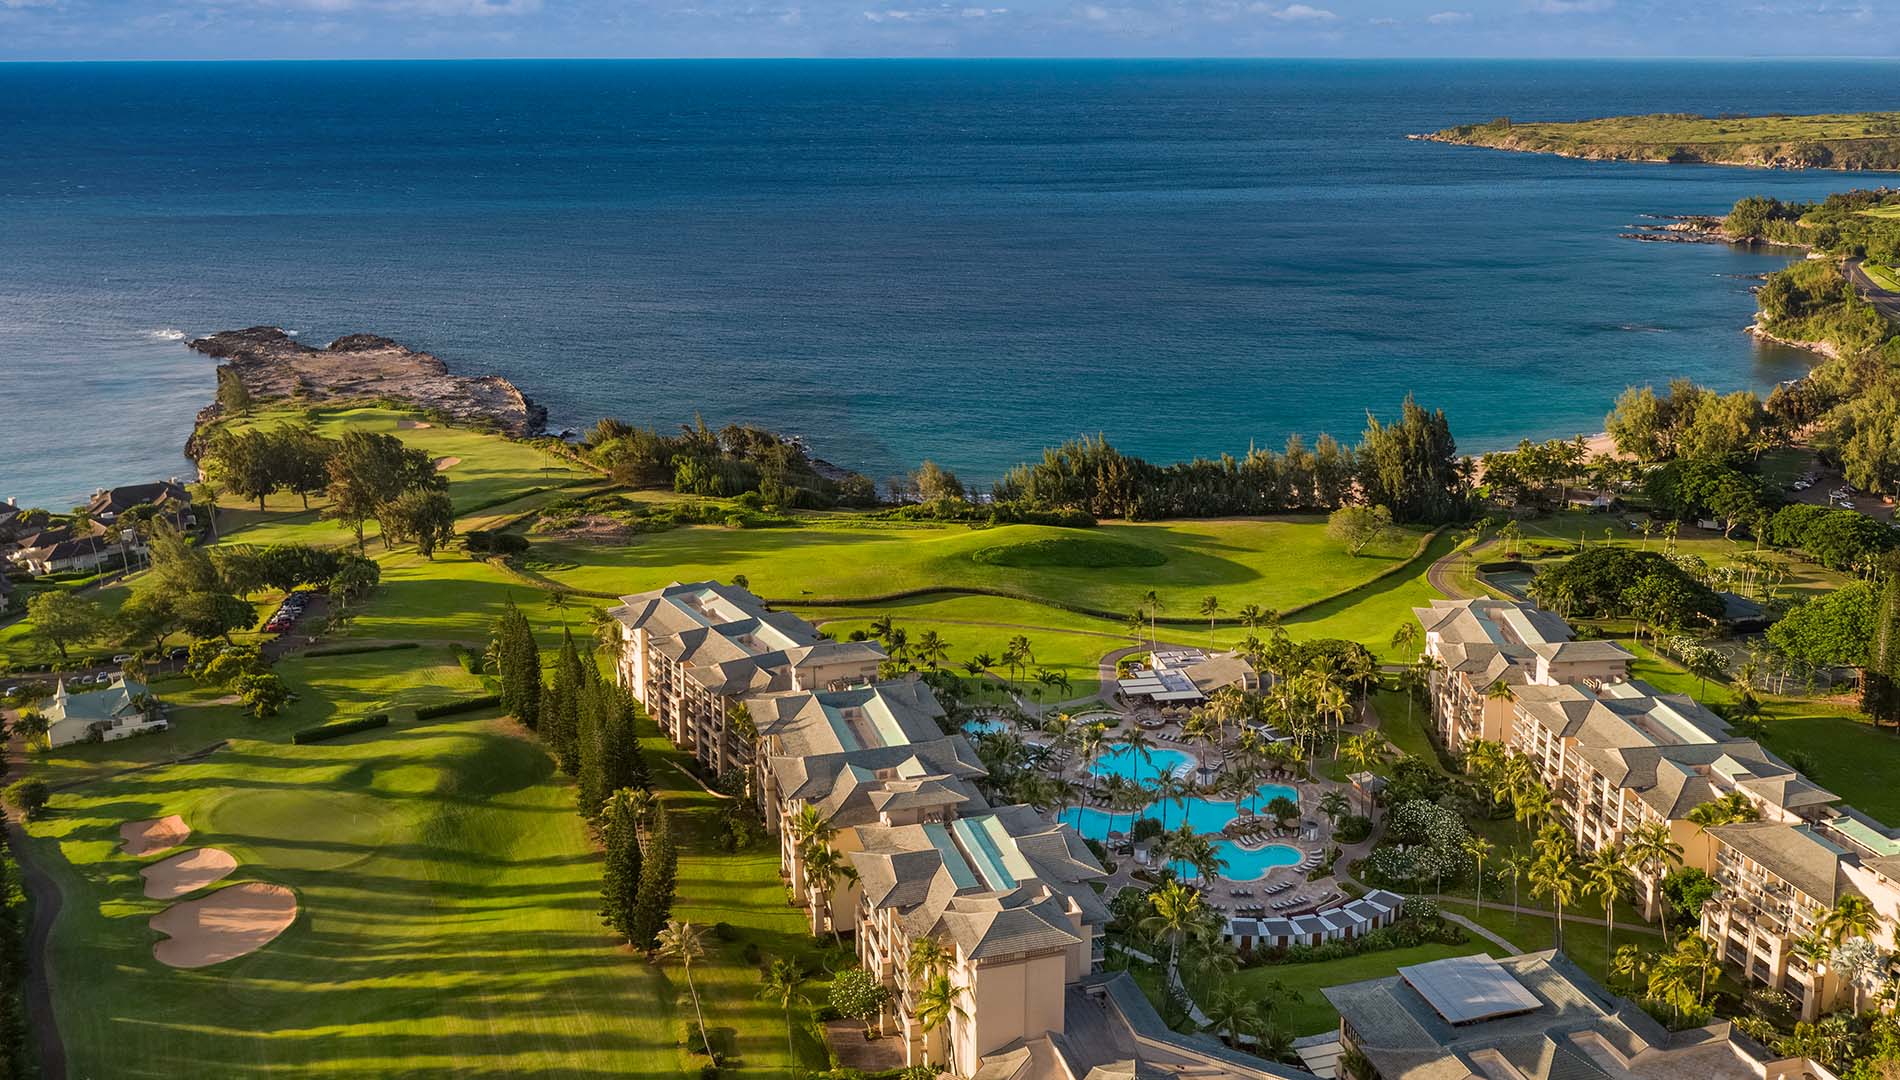 The Ritz Carlton in Hawaii